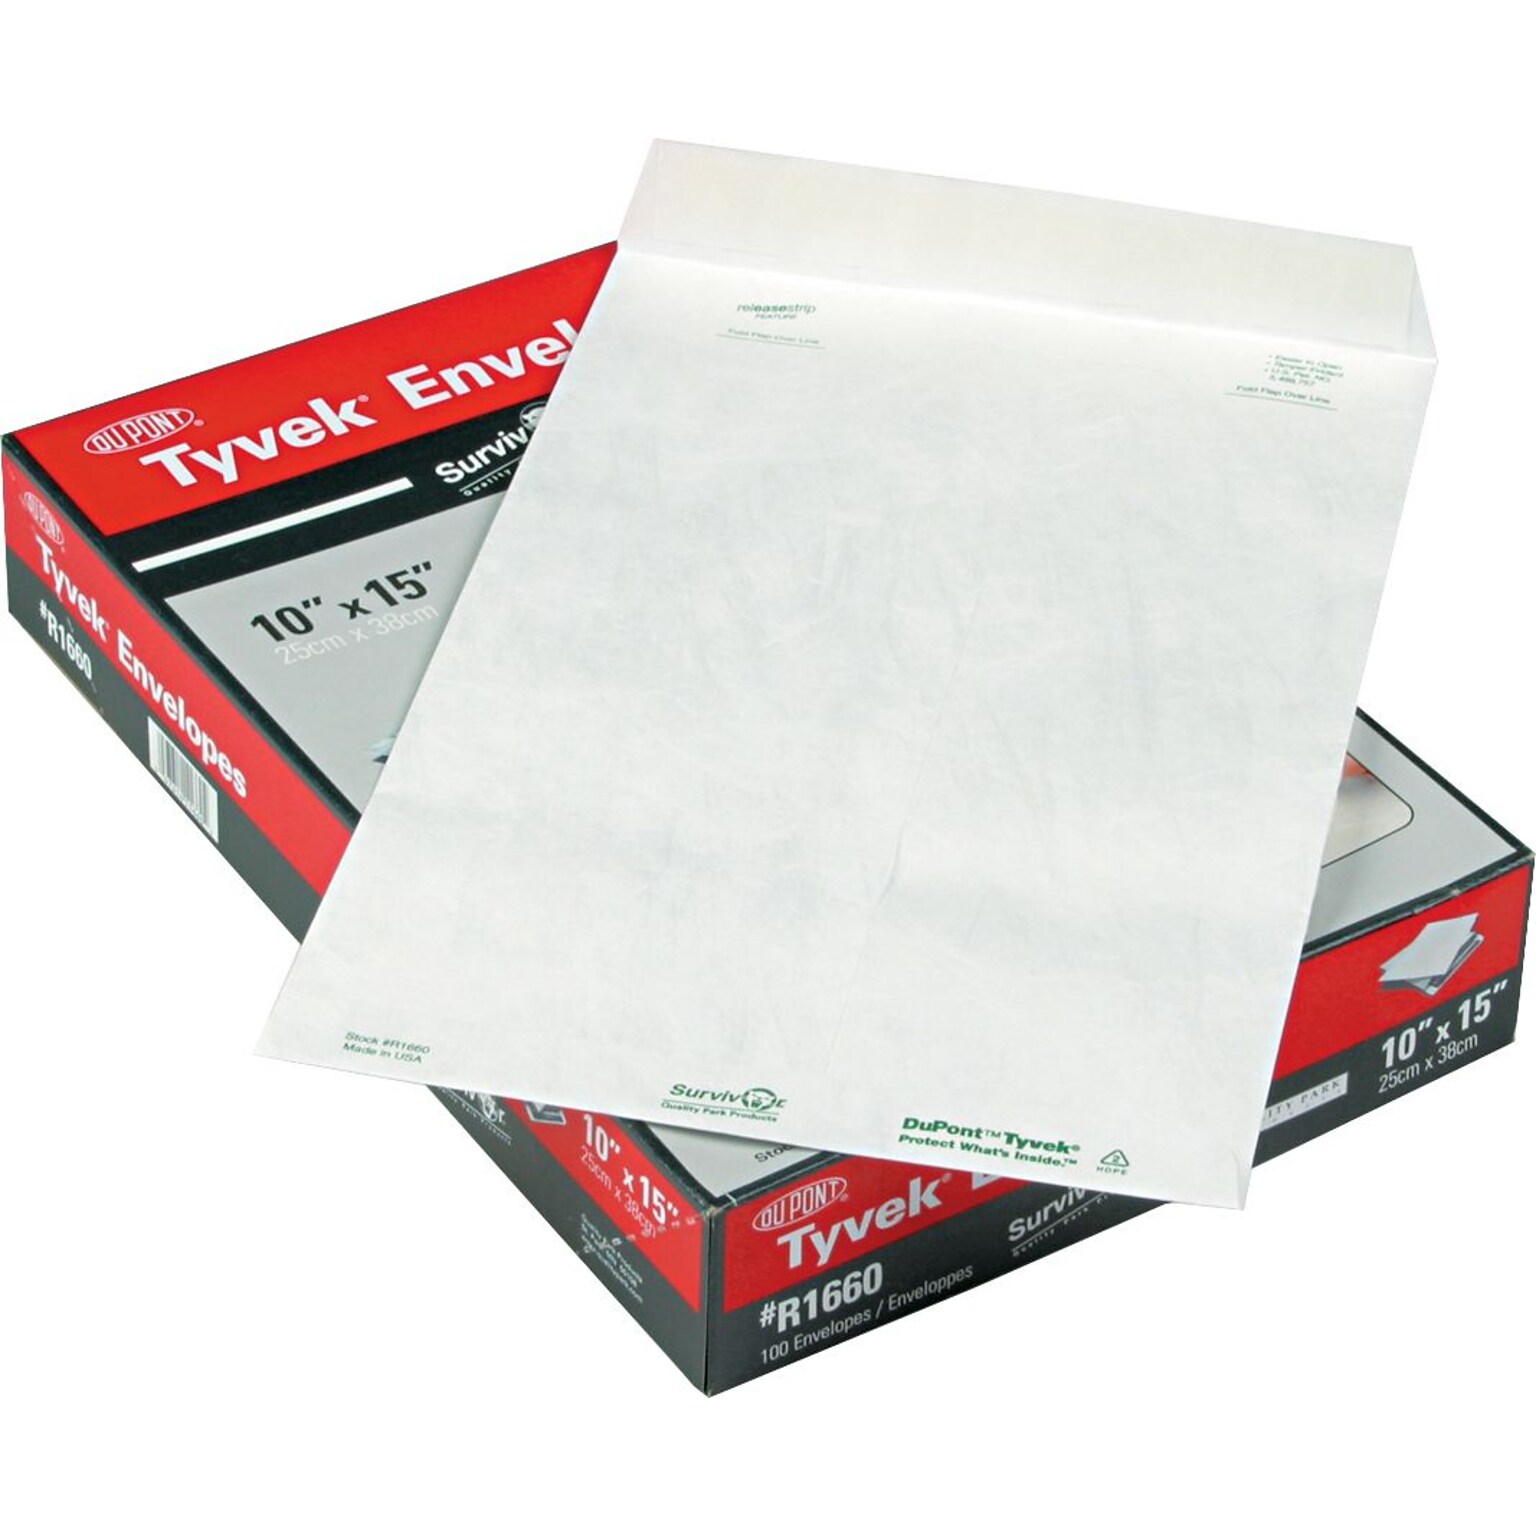 Quality Park Tyvek Flap-Stik Self Seal #98 Catalog Envelope, 10 x 15, White, 100/Box (R1660)